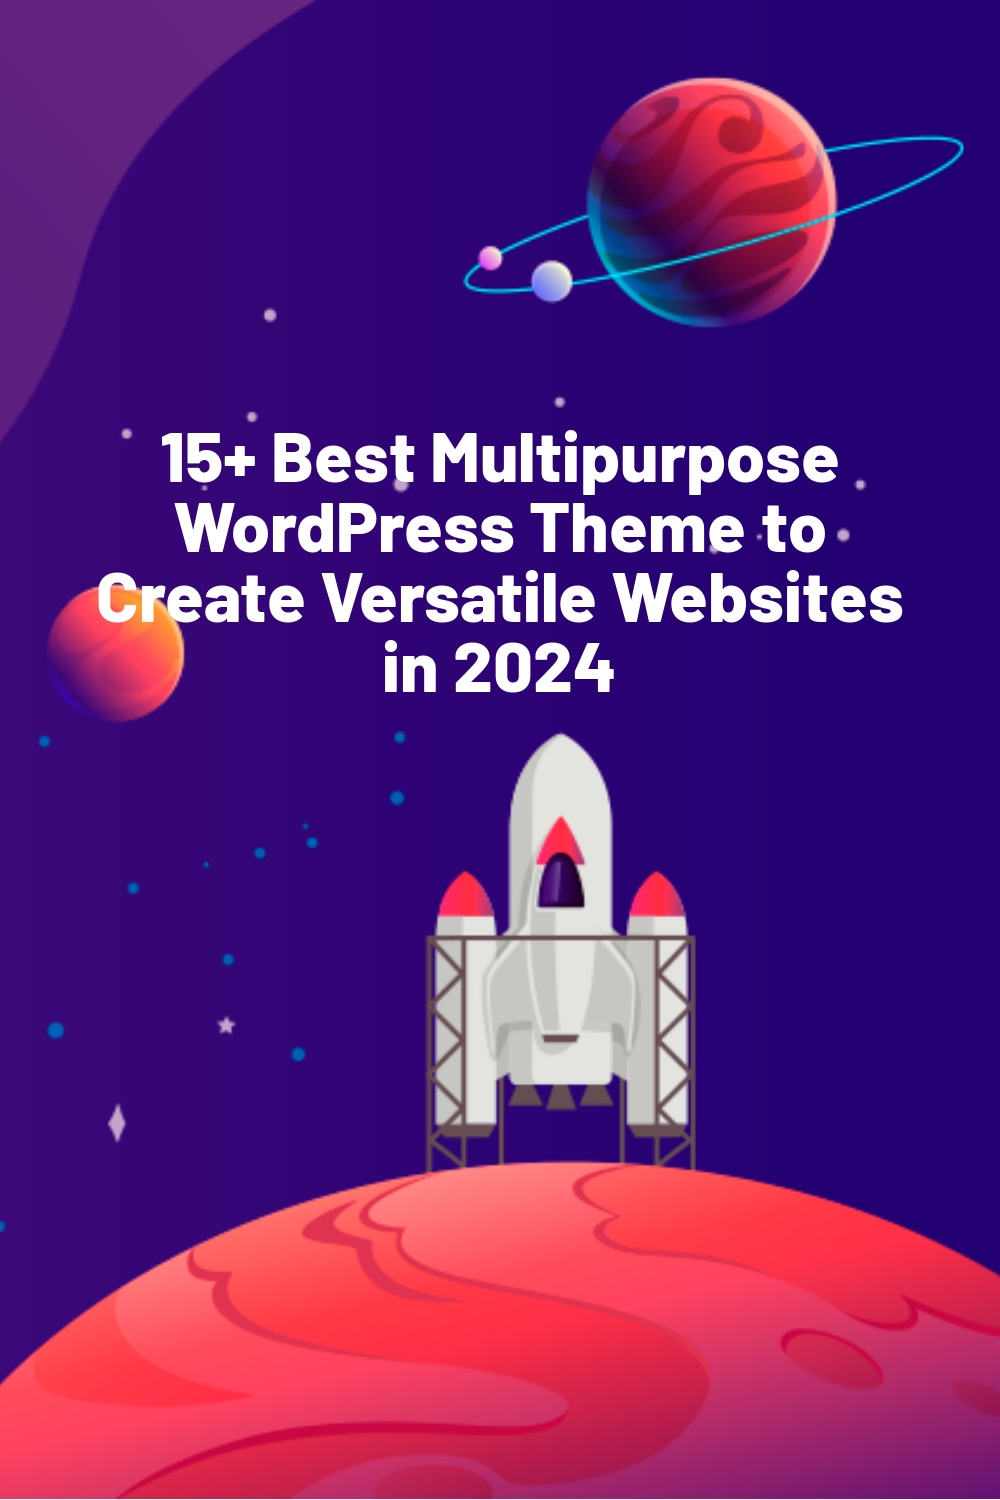 15+ Best Multipurpose WordPress Theme to Create Versatile Websites in 2024